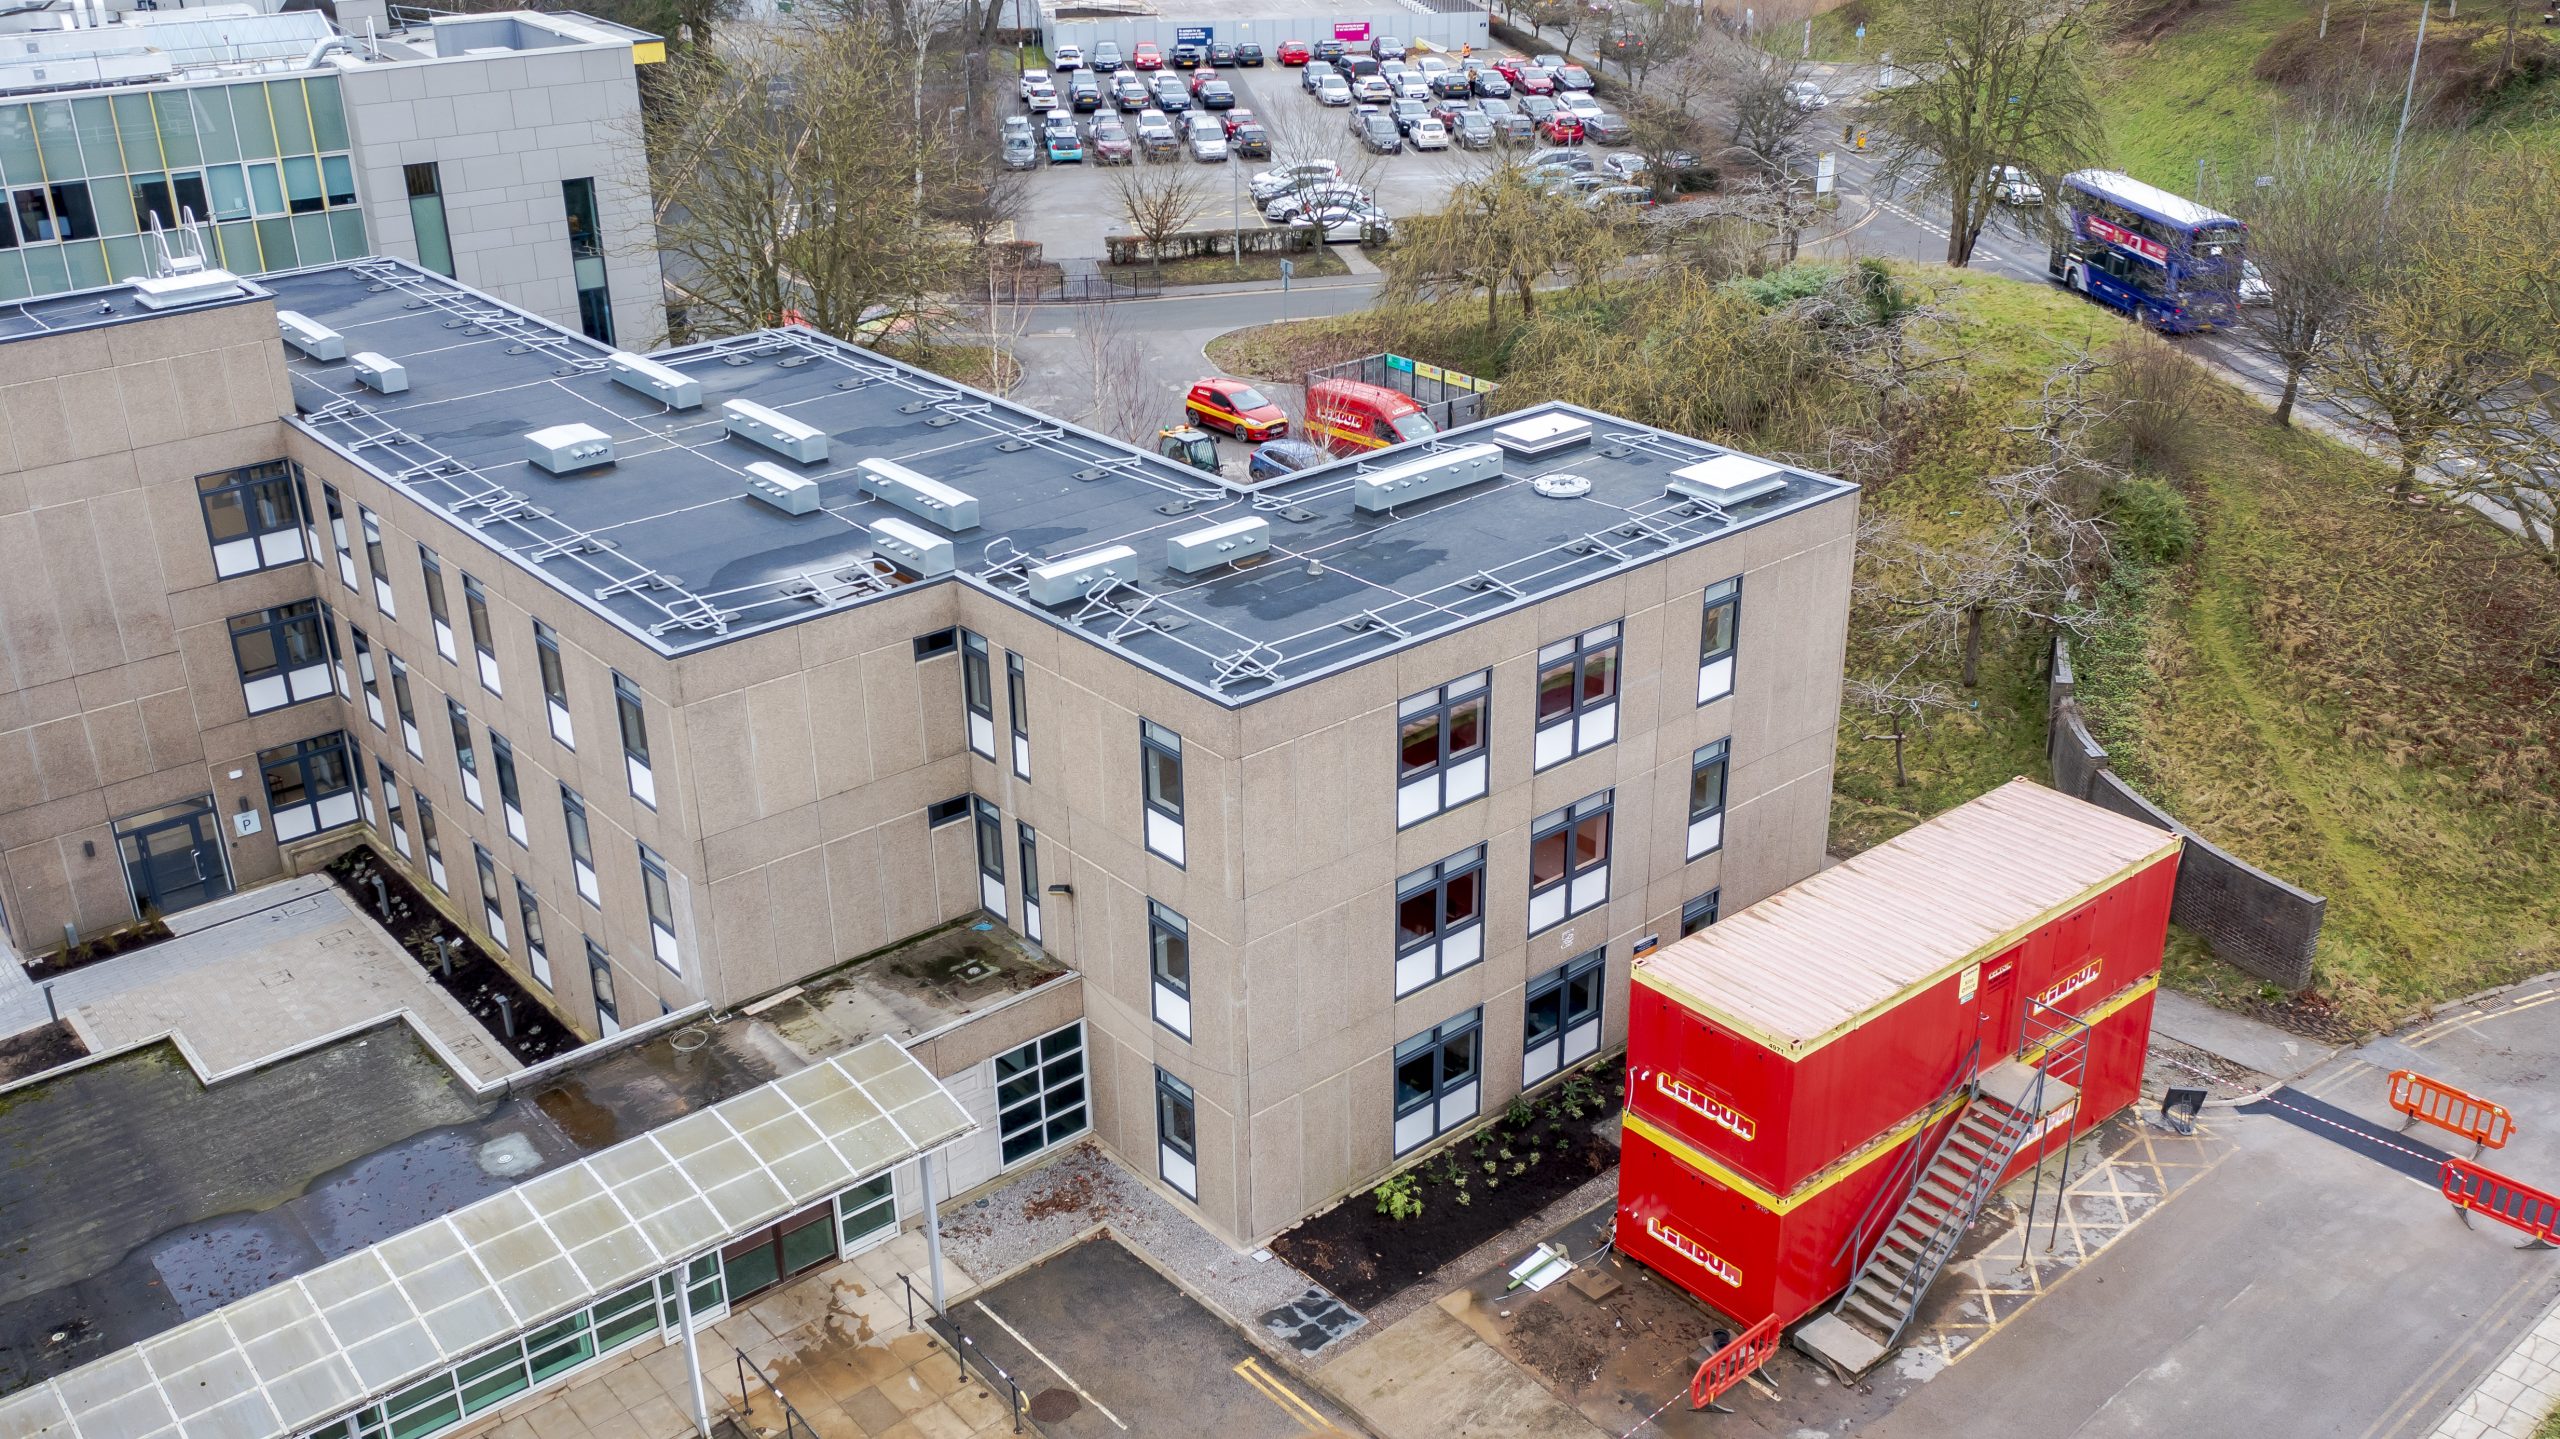 Lindum Group hands over refurbished University of York Student accommodation block